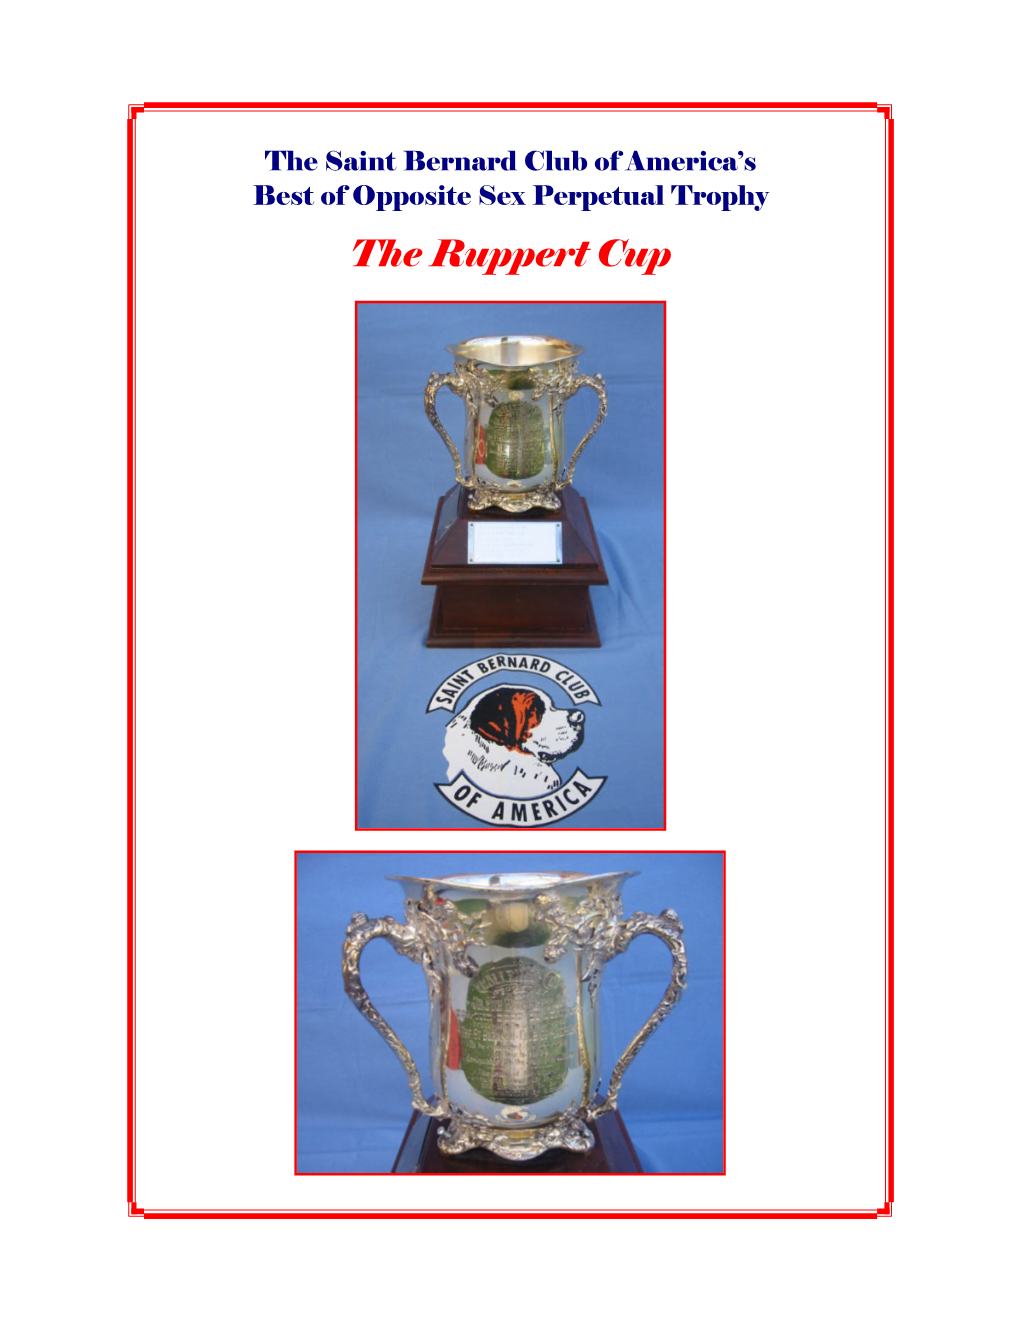 The Ruppert Cup